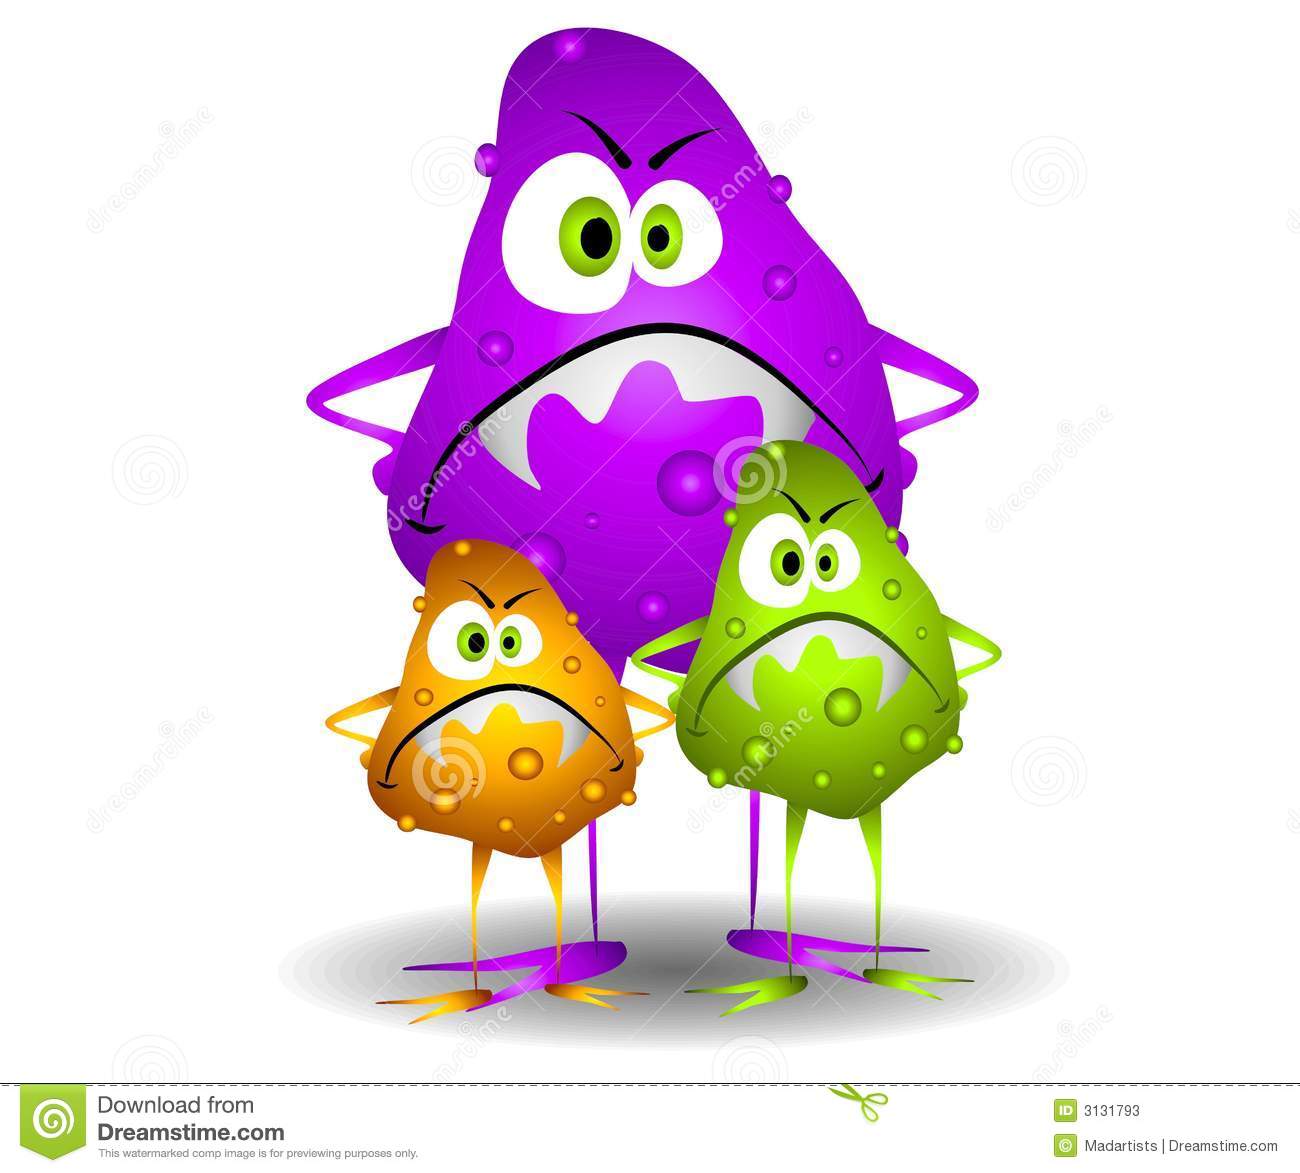 Clip Art Cartoon Illustration Of 3 Nasty Looking Germs Viruses Or